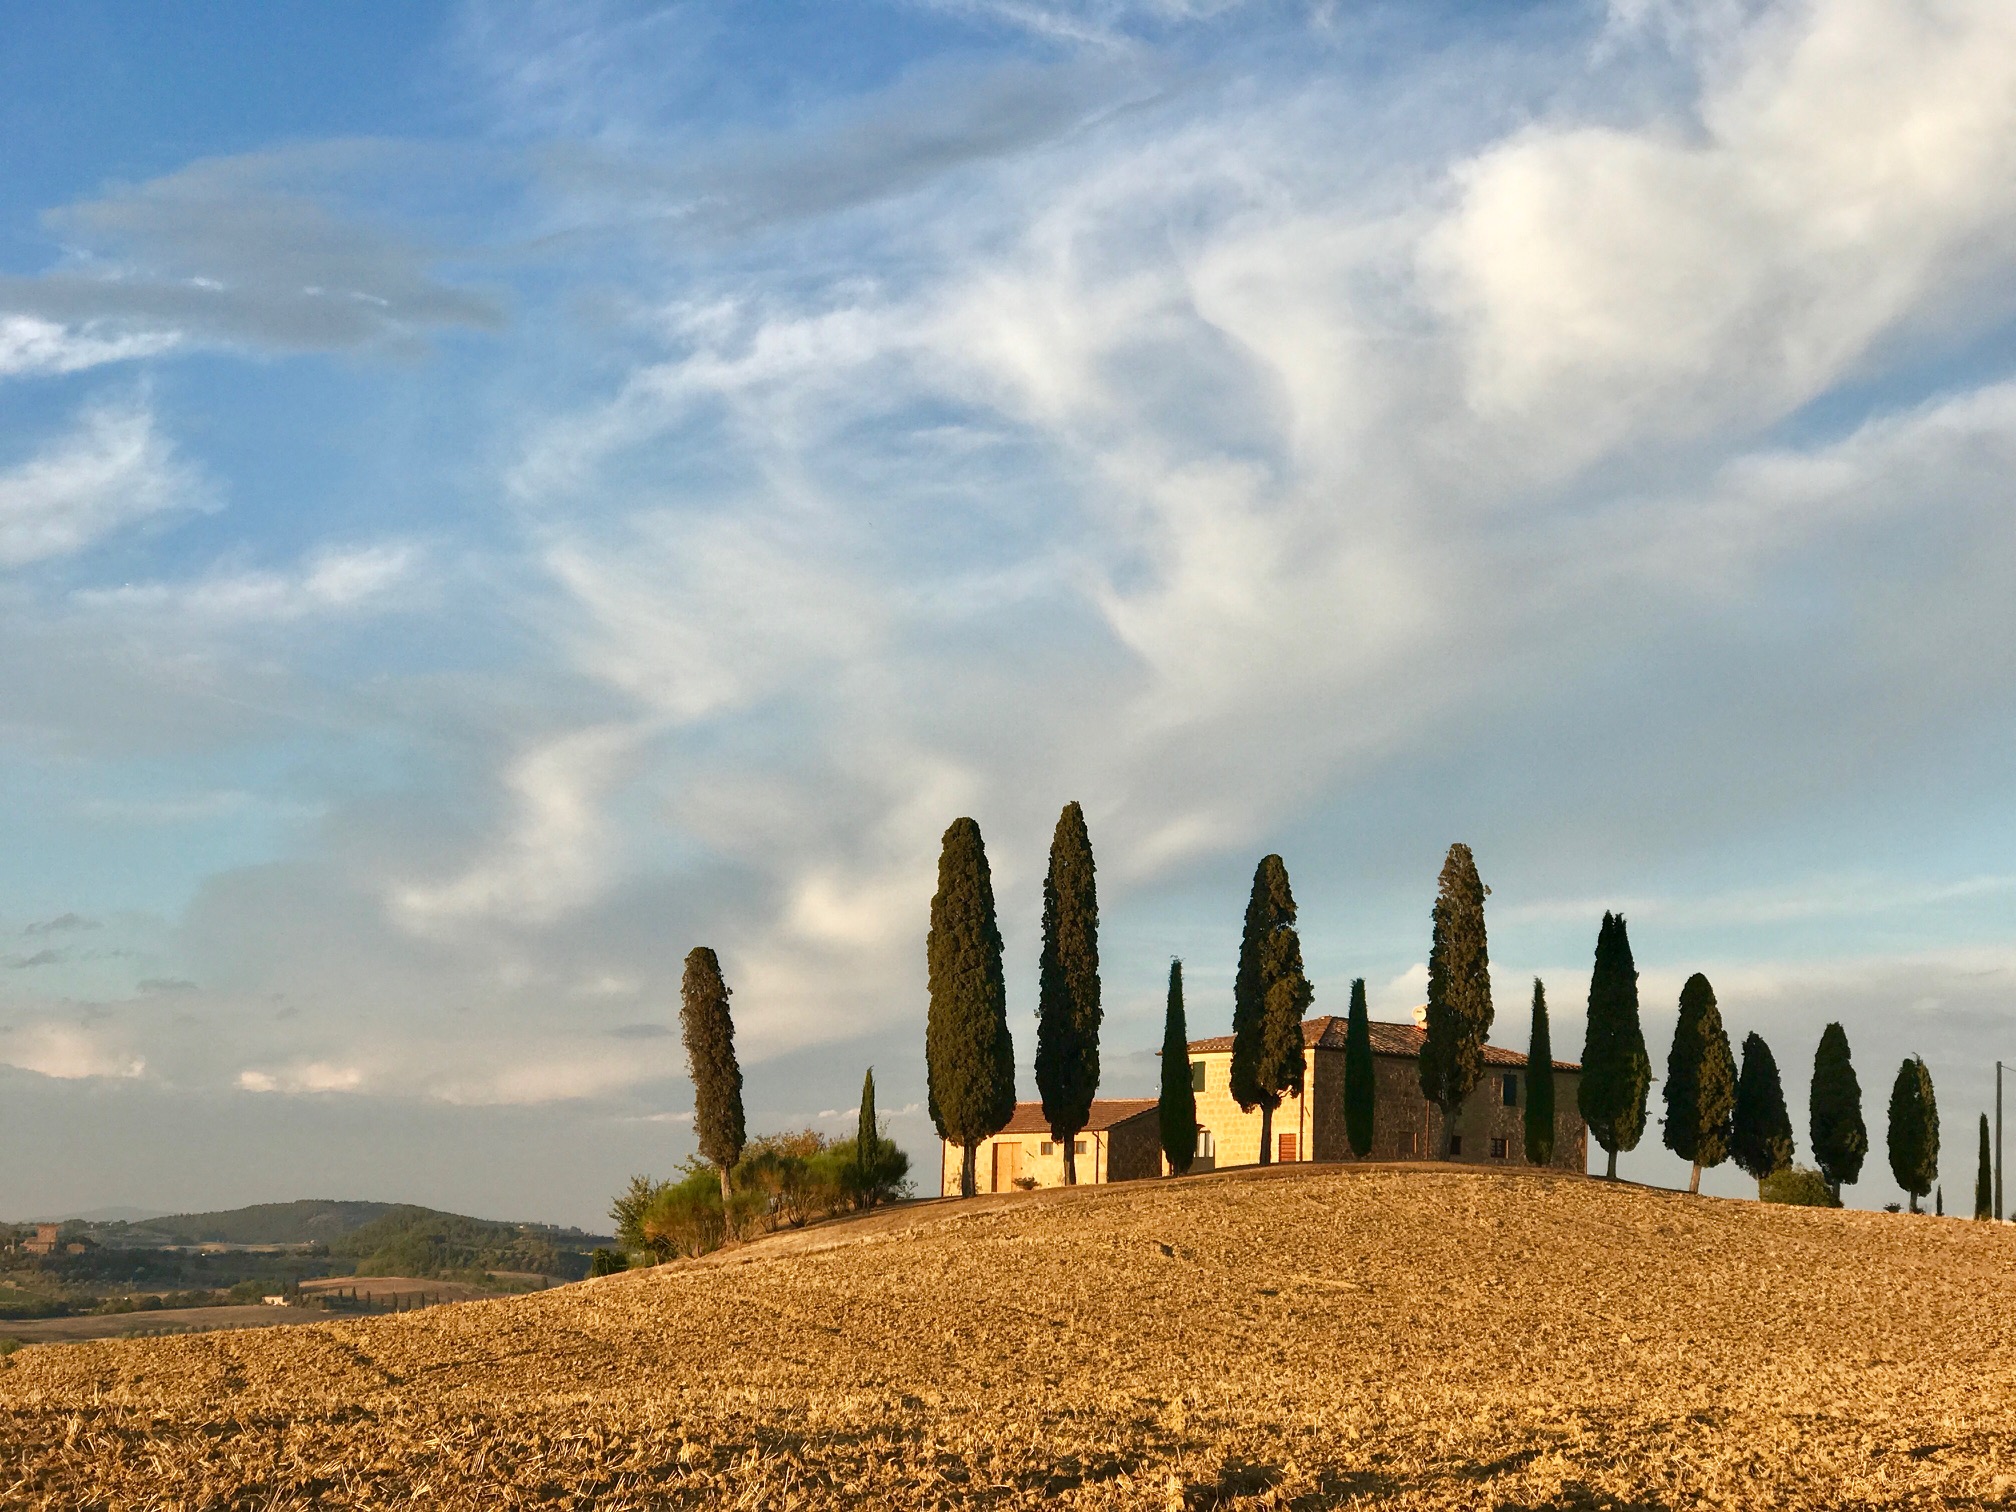 A photograph of the Tuscany region of Italy. 